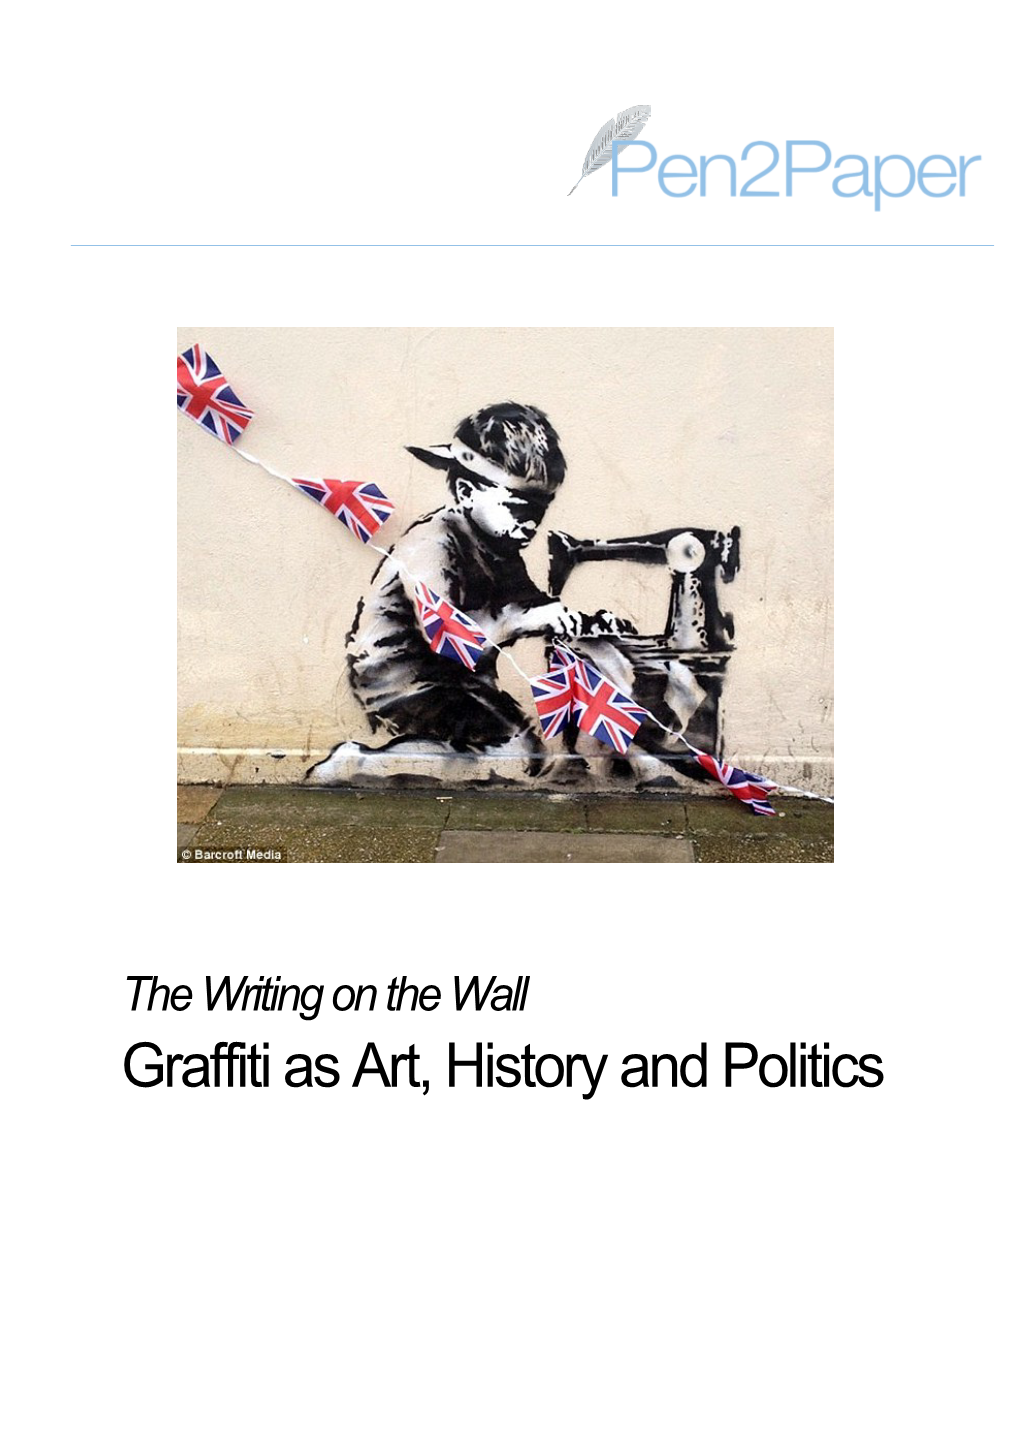 Graffiti As Art, History and Politics